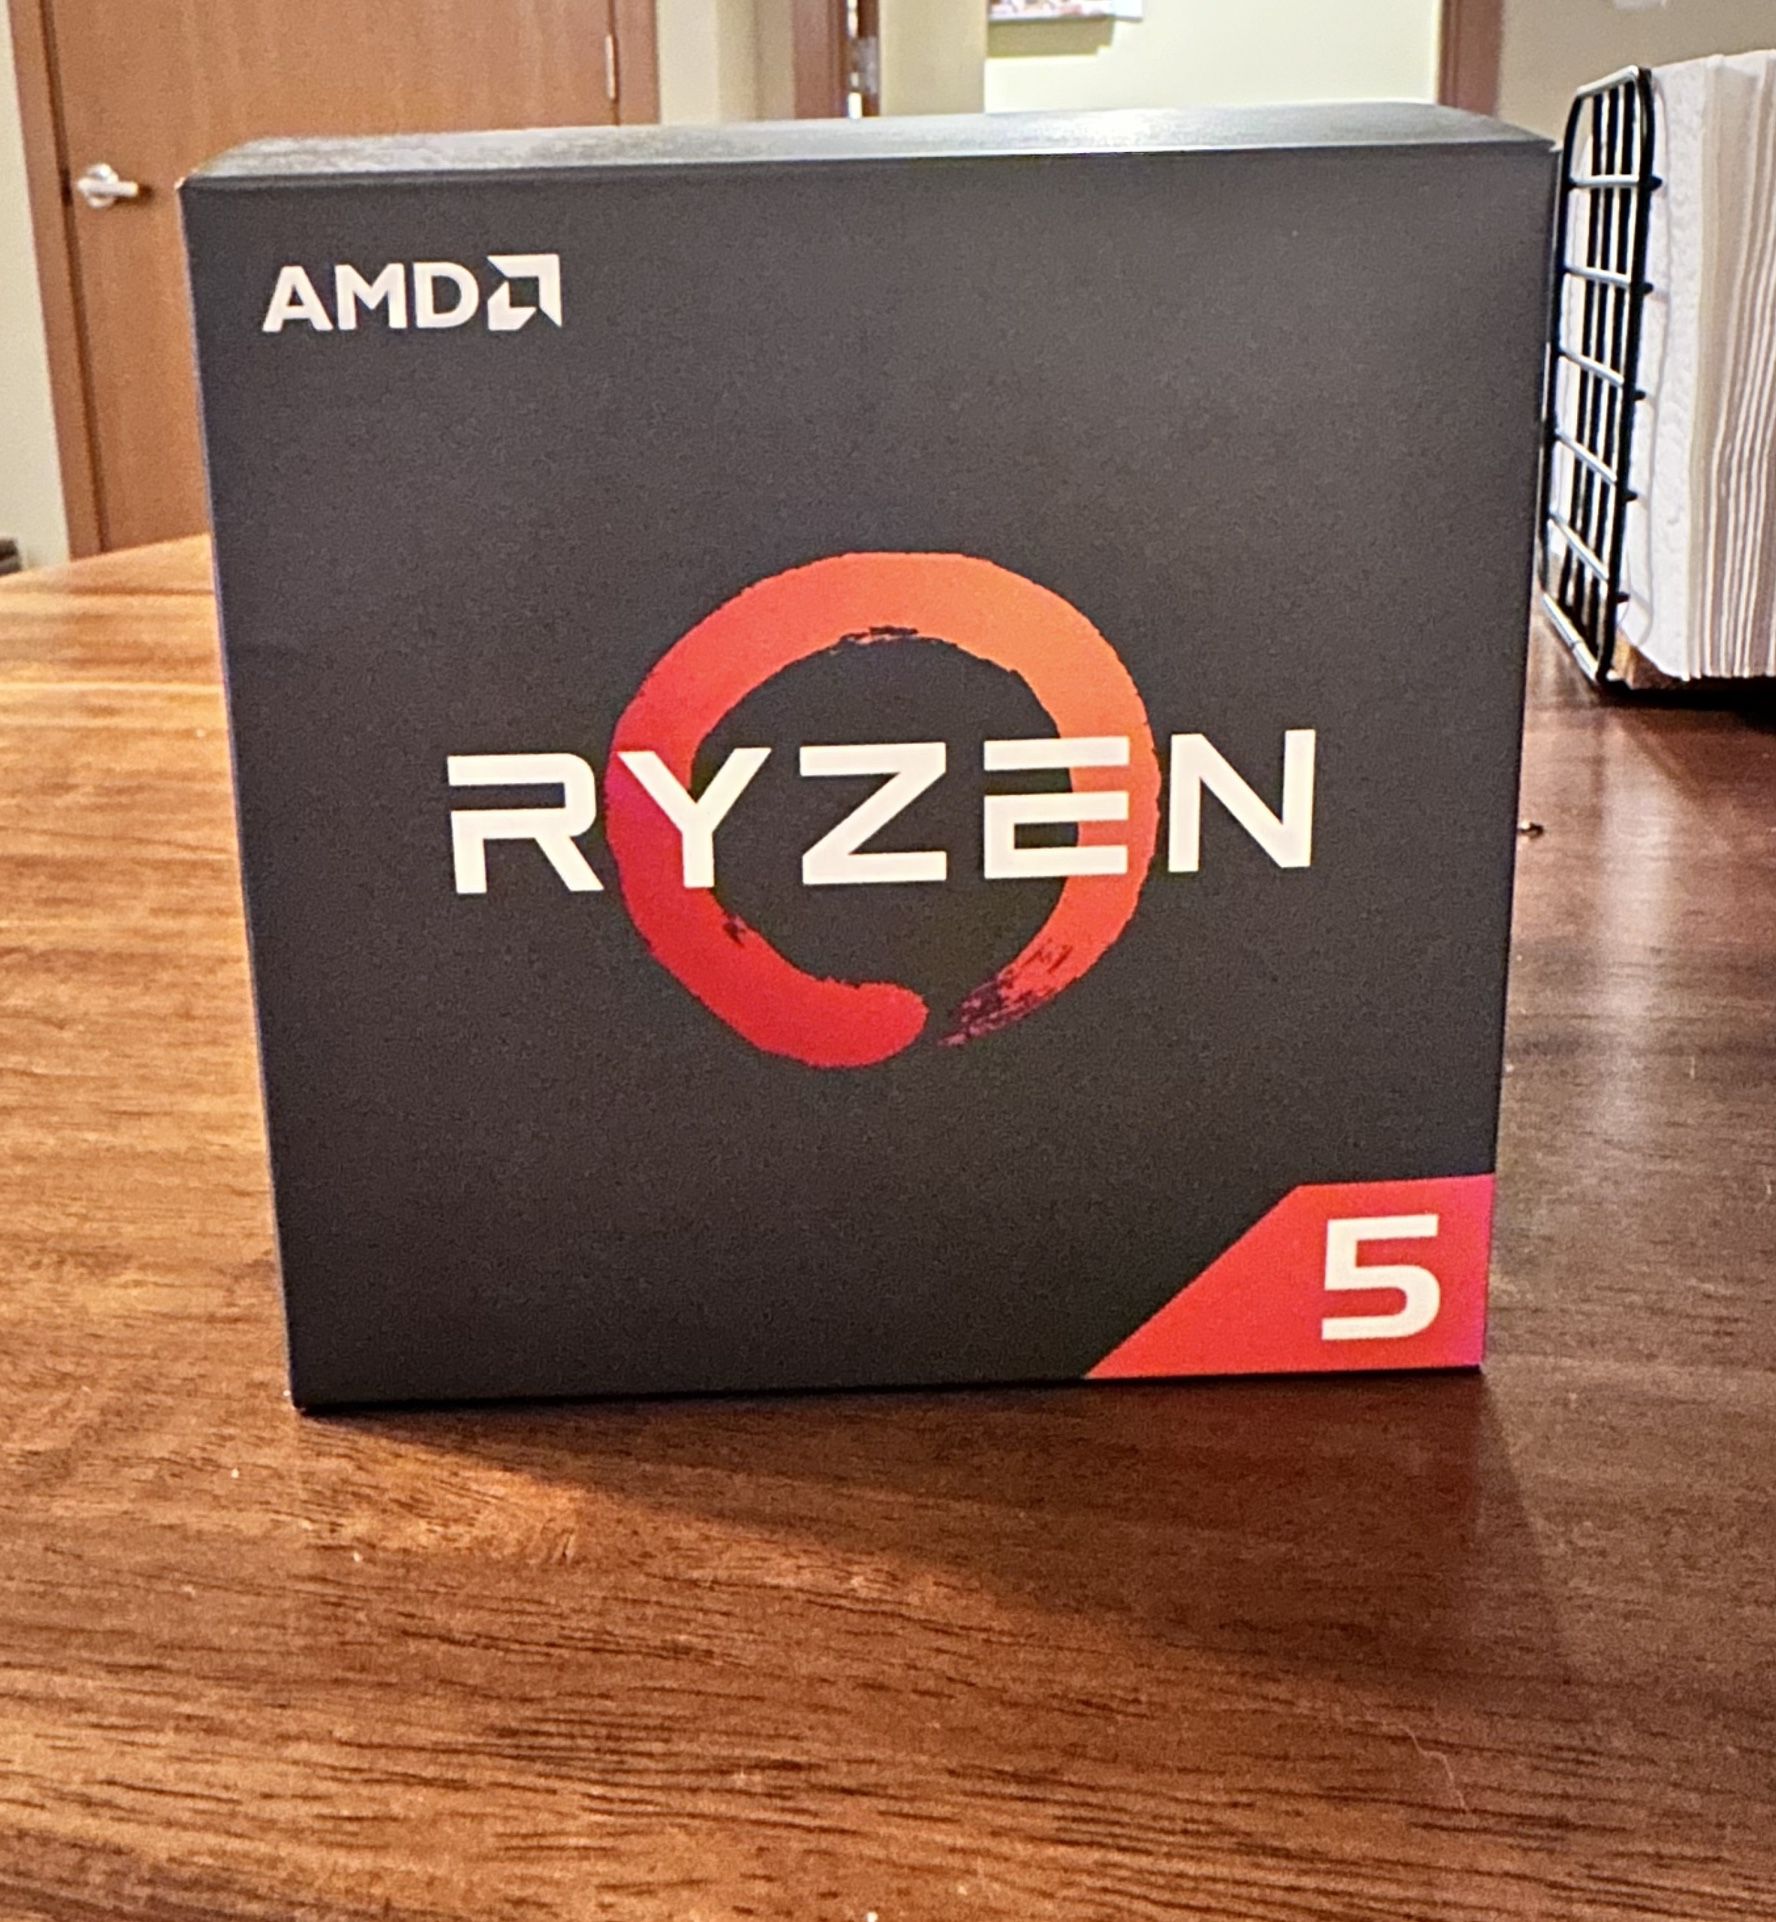 AMD Ryzen 5 2600X - Processor